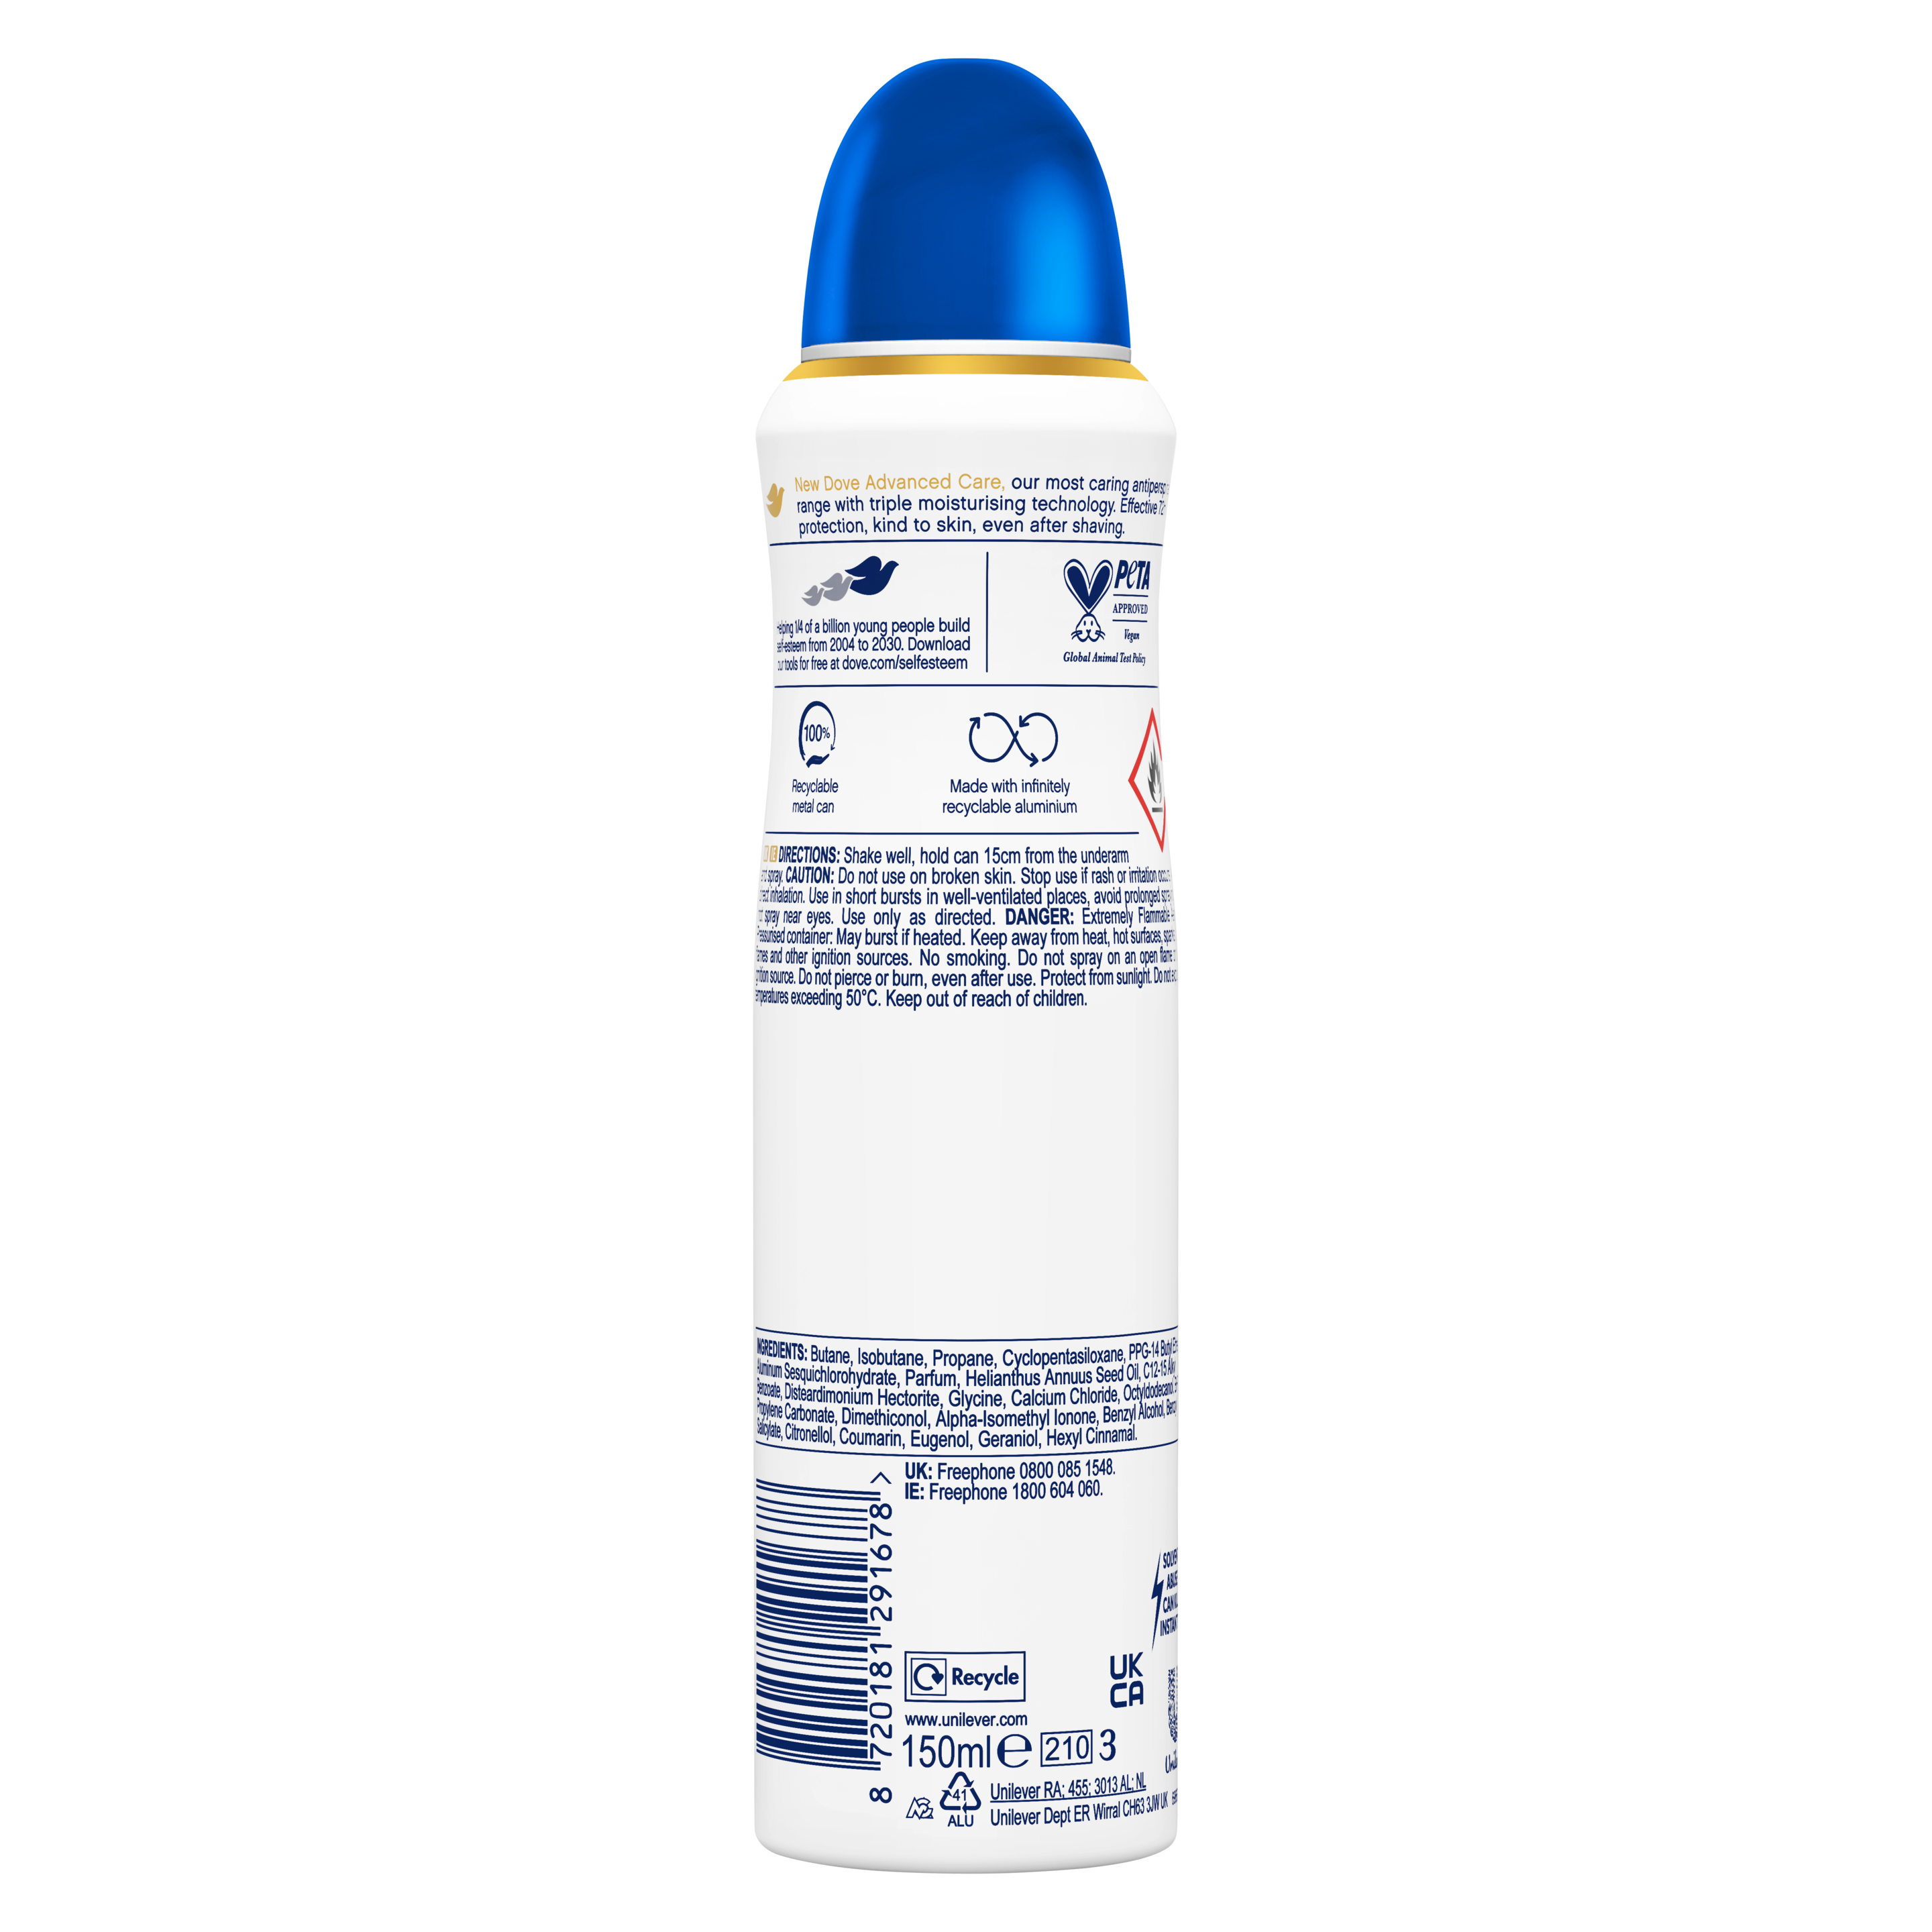 Advanced Care Original Antiperspirant Deodorant Spray